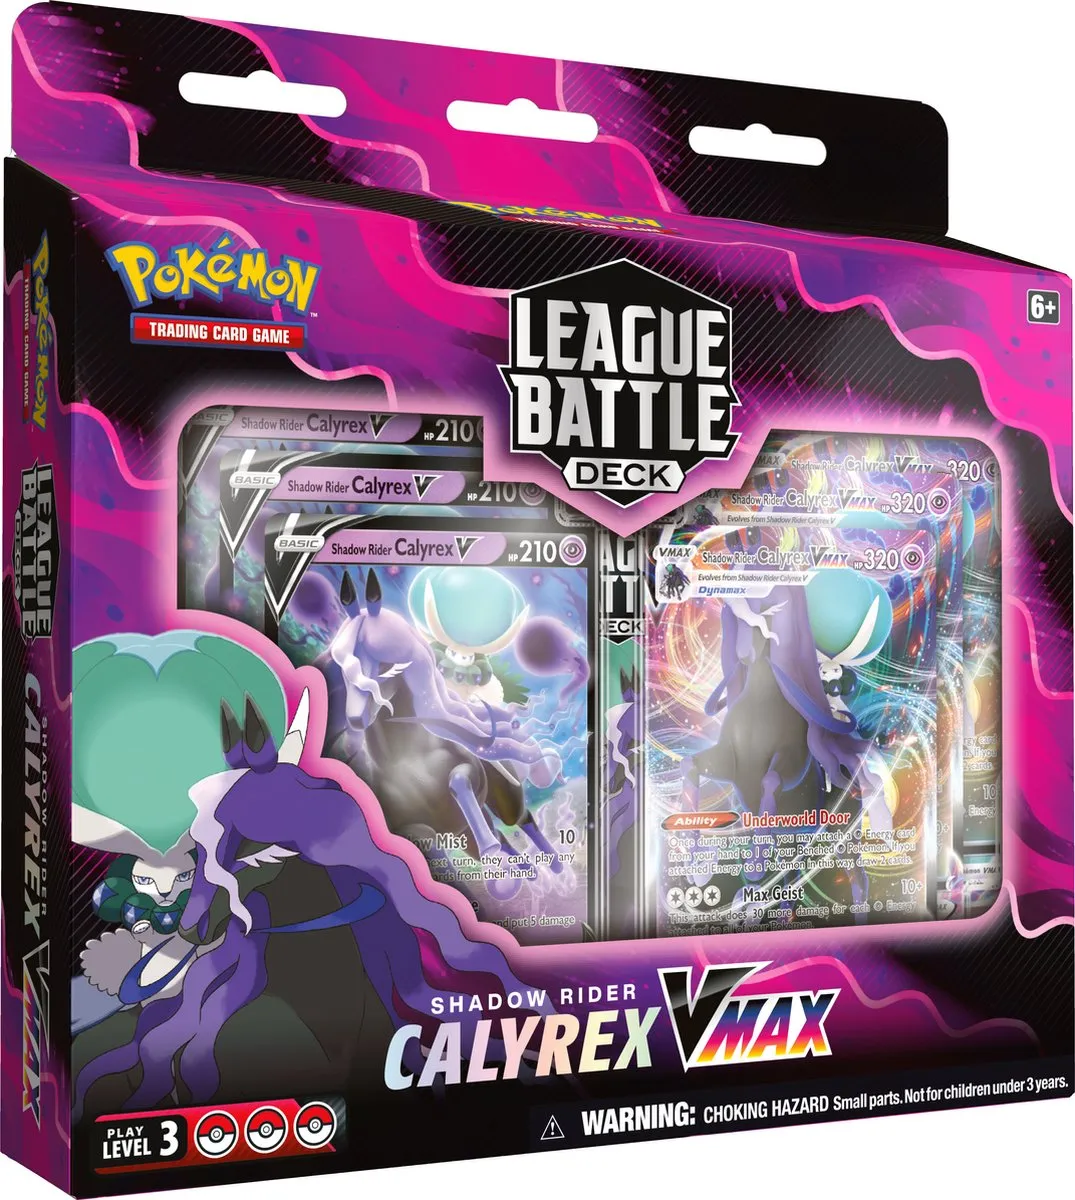 Pokémon League Battle Deck ShadowRider Calyrex VMAX - Pokémon Kaarten speelgoed